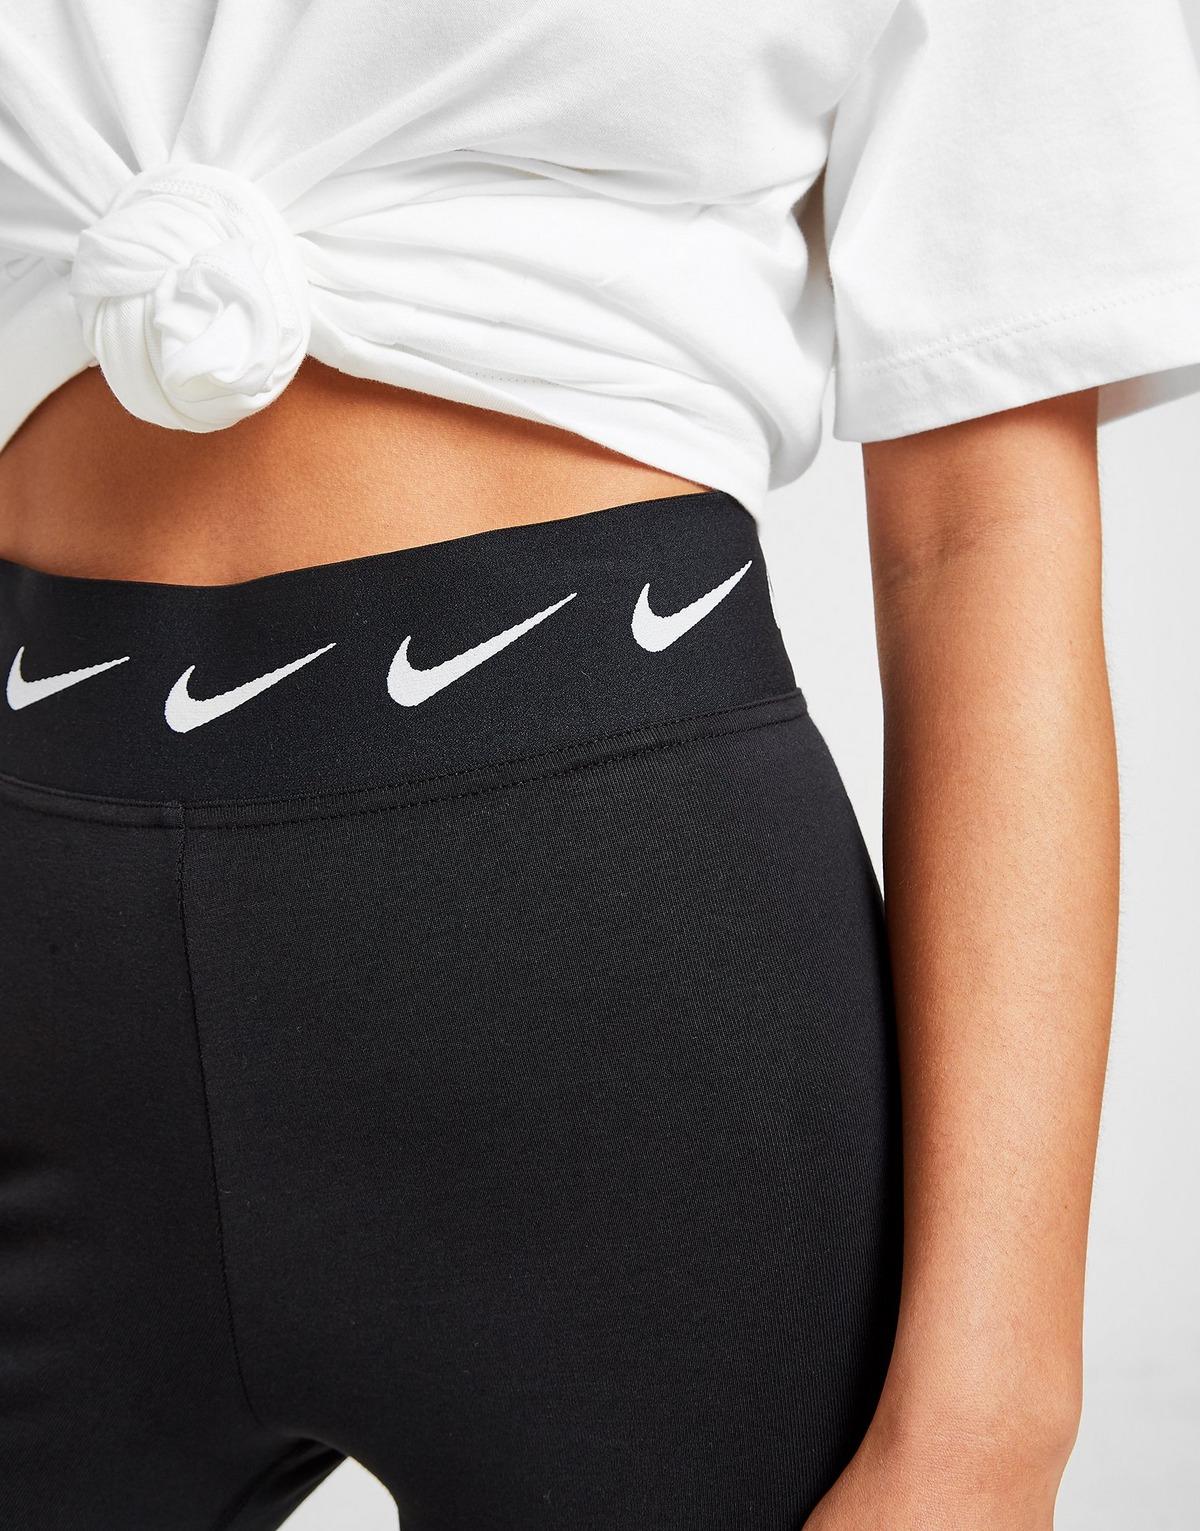 Nike Cotton High Waisted Single Swoosh Leggings in Black/White (Black ...